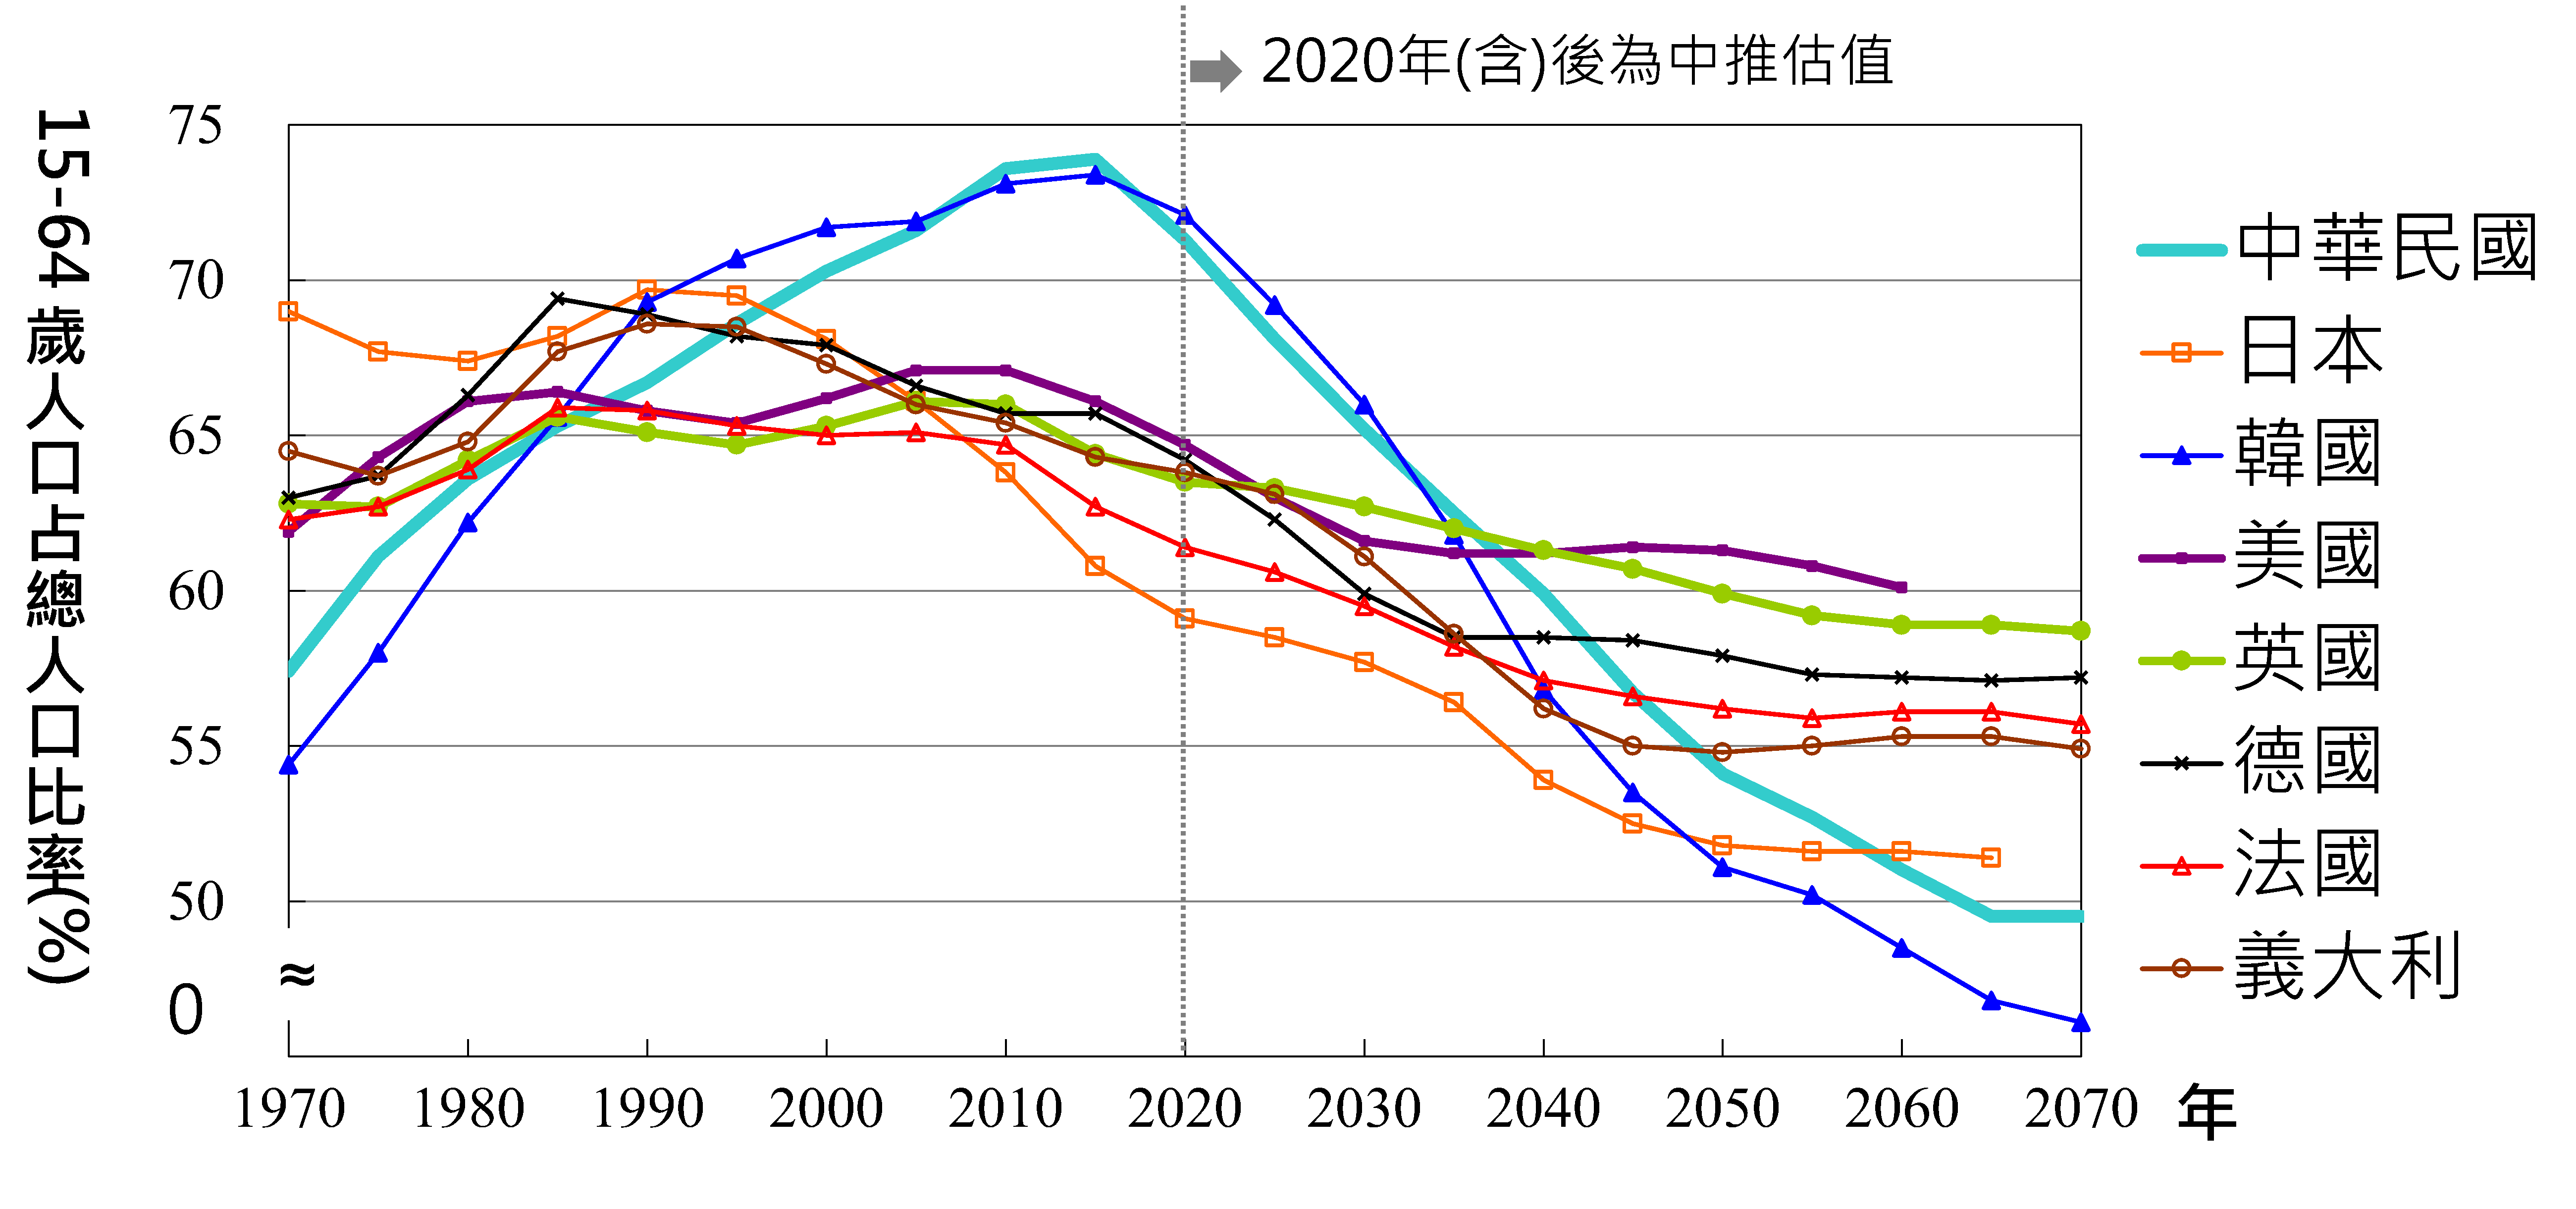 Re: [問卦] 生育率過低的台灣未來會變成怎麼樣？